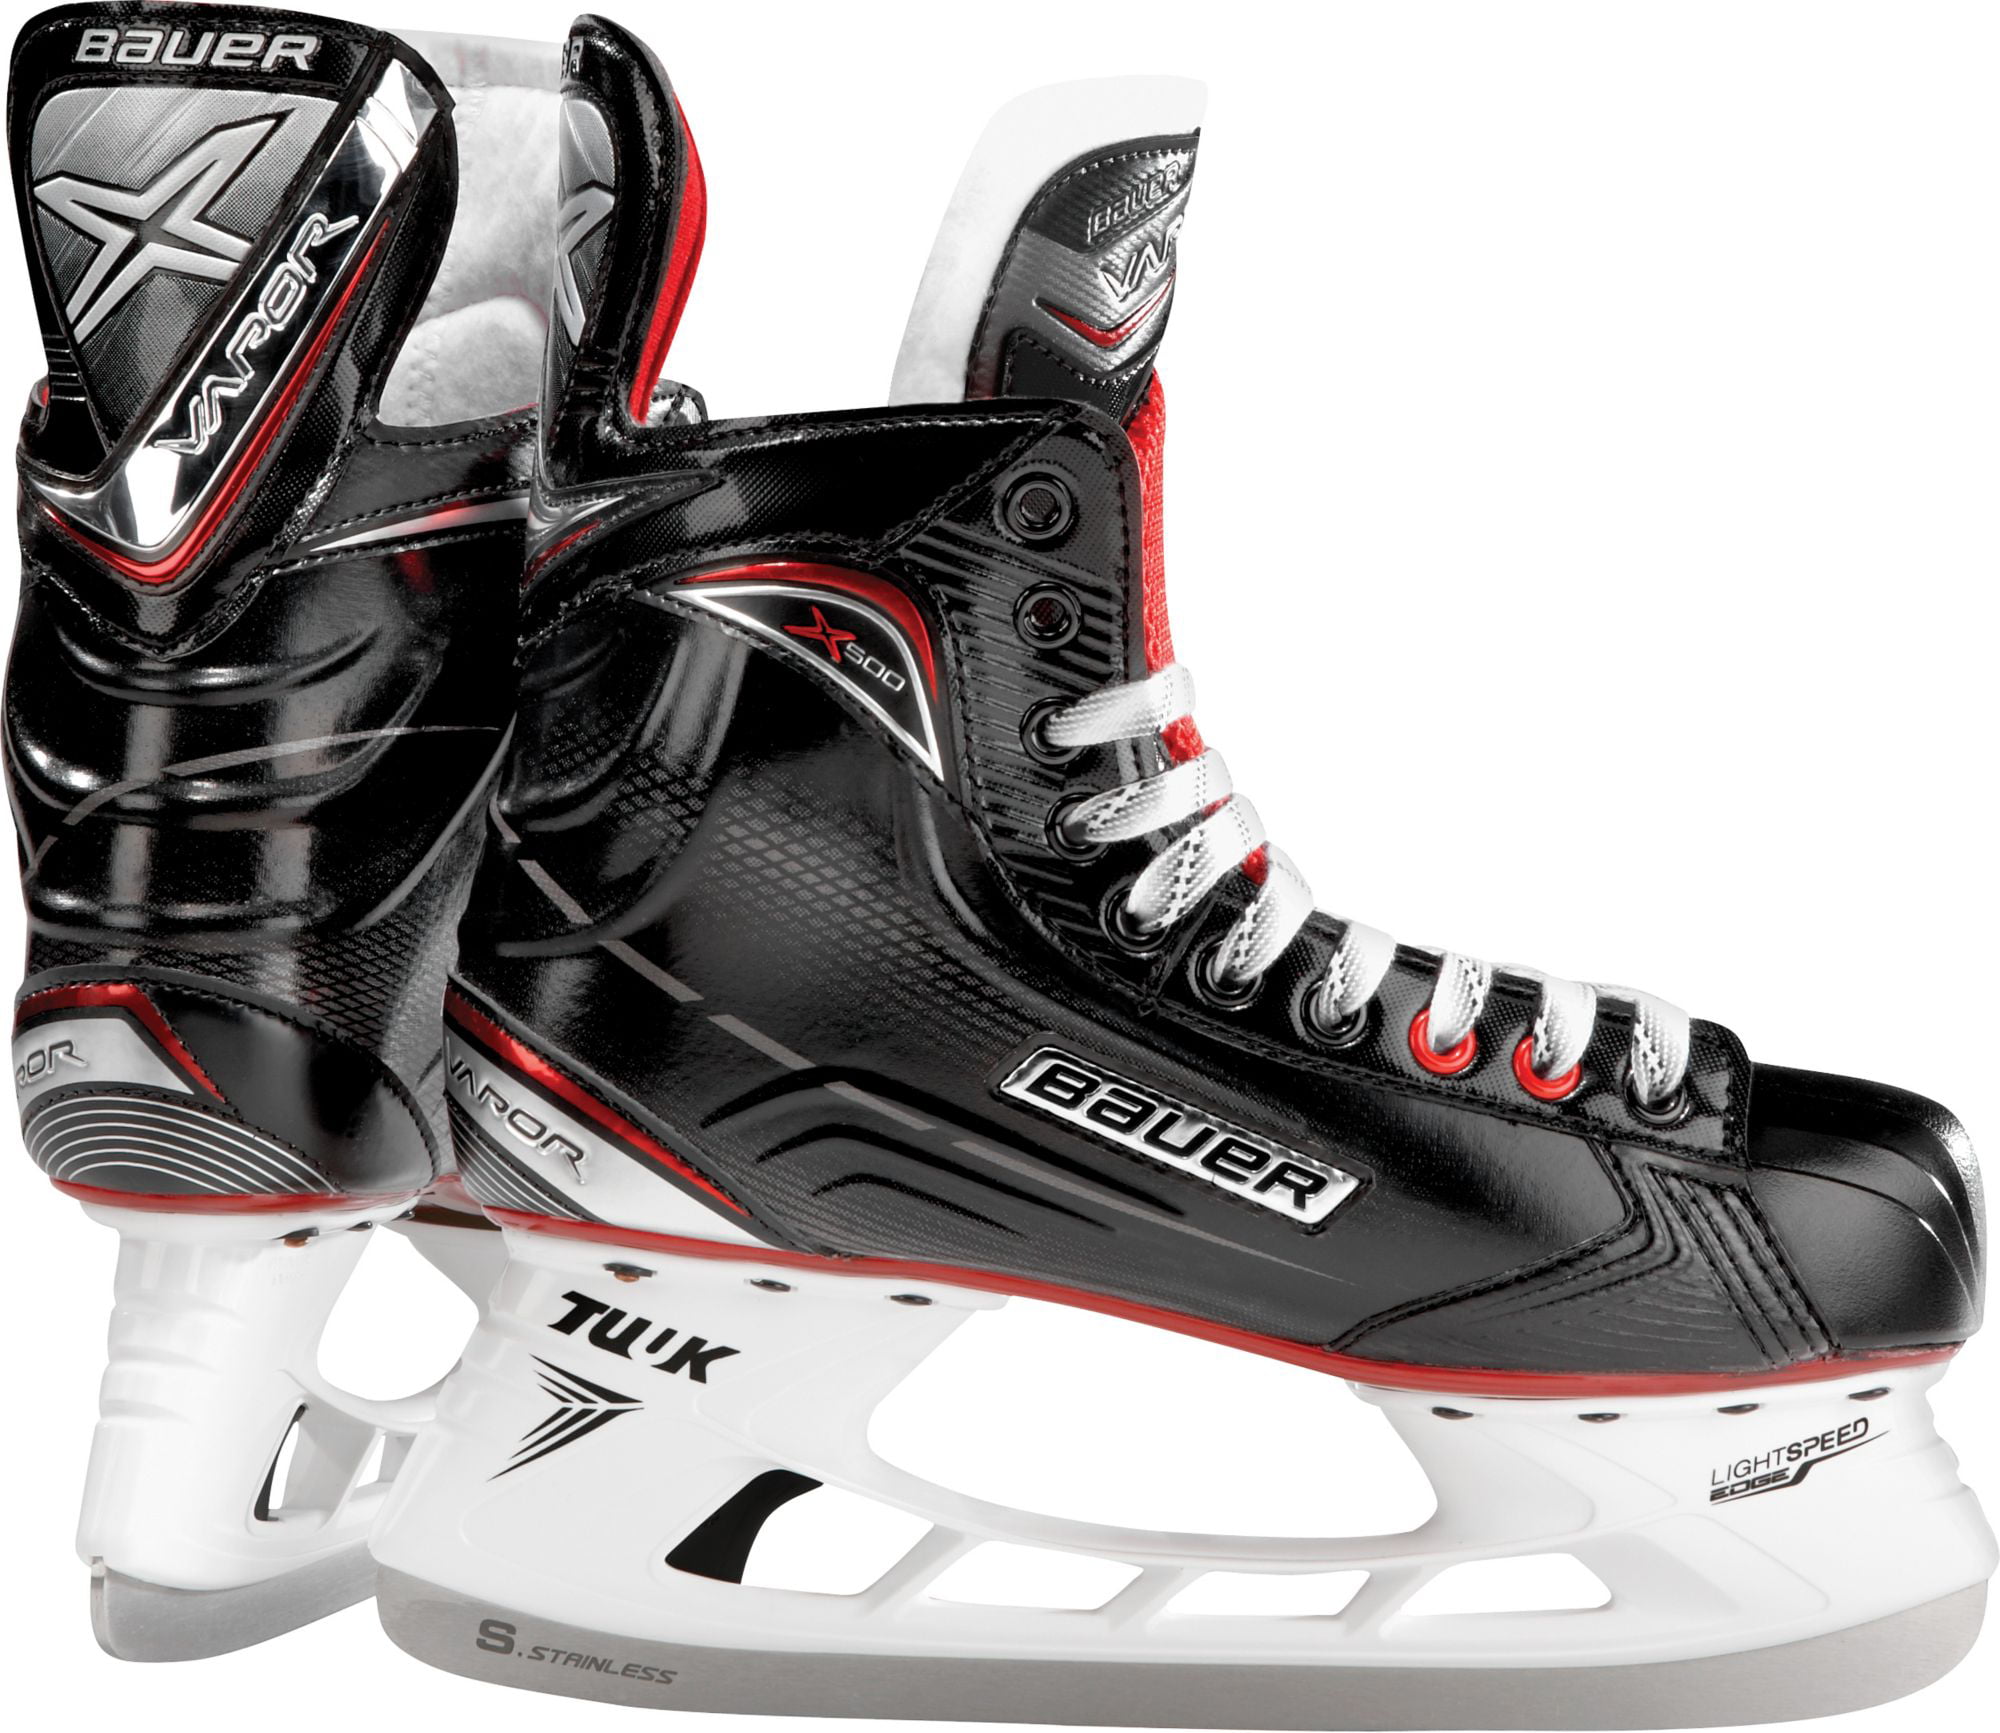 retails $100 Bauer Vapor X500 Youth Ice Hockey Skates 2-8 Years Old Kids 